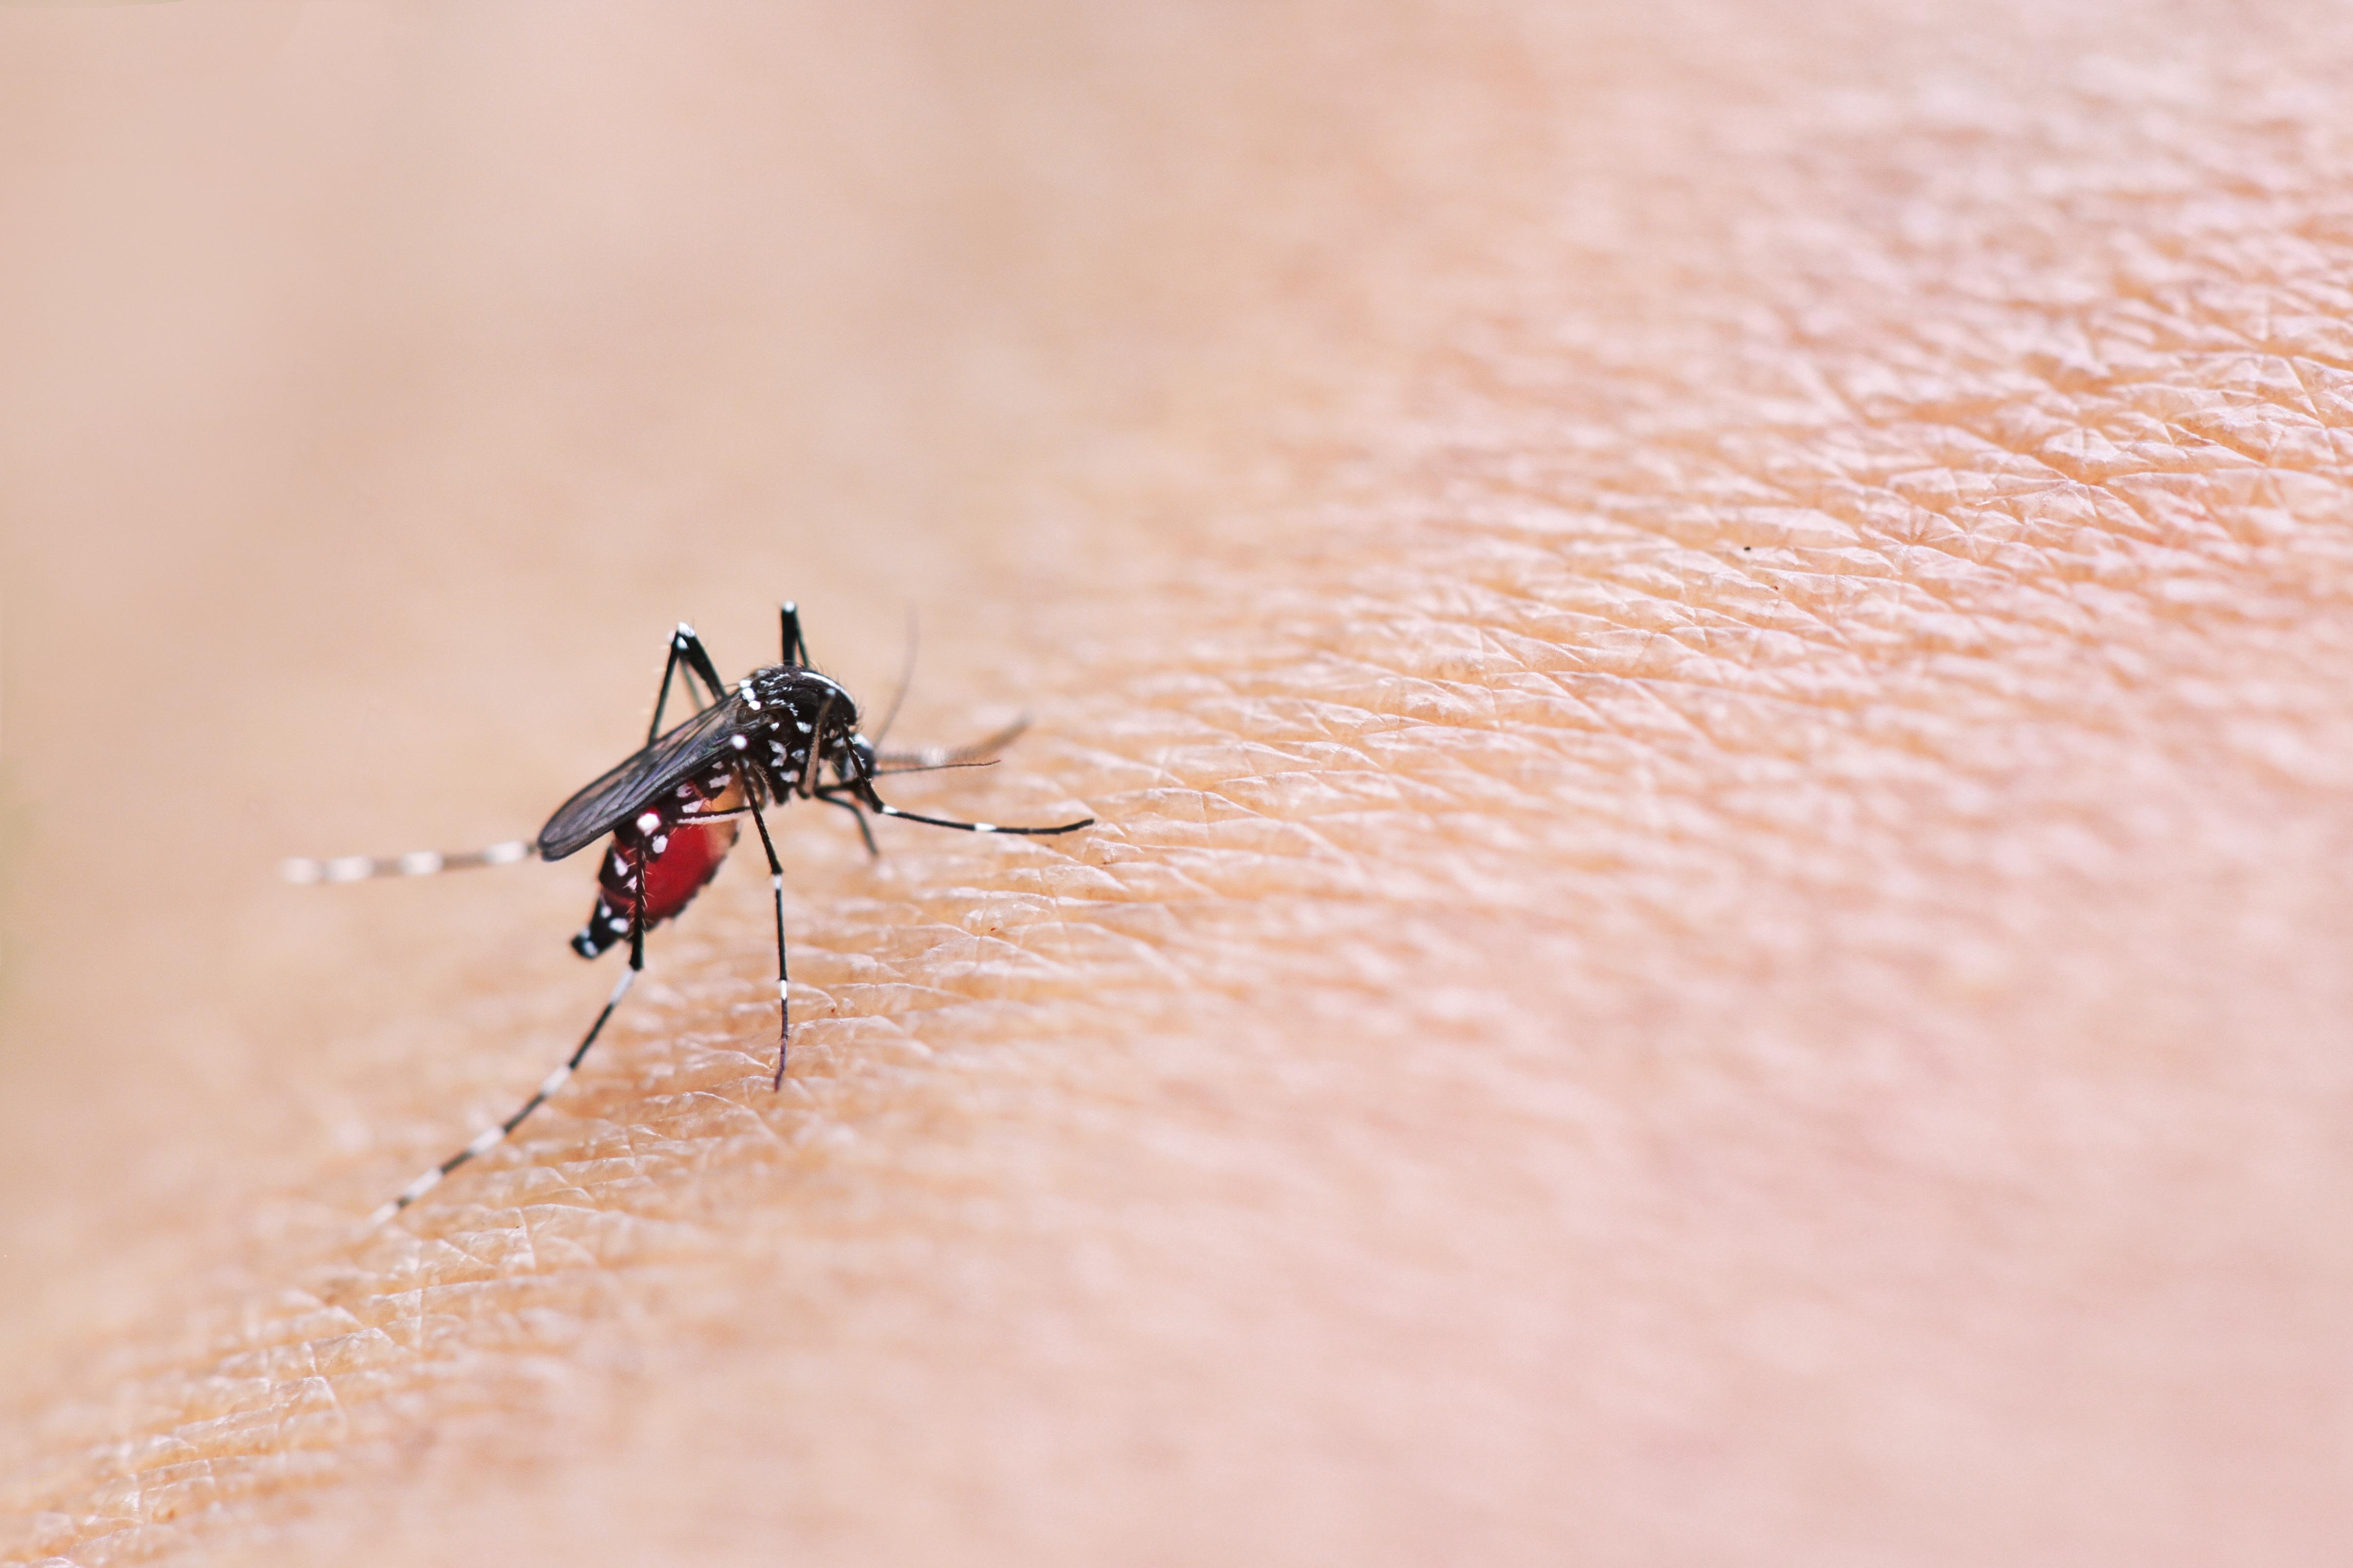 Оранжевый комар. Aedes aegypti комар. Комар Зика. Кровососущие насекомые Ленинградской области. Кровососущие комары.